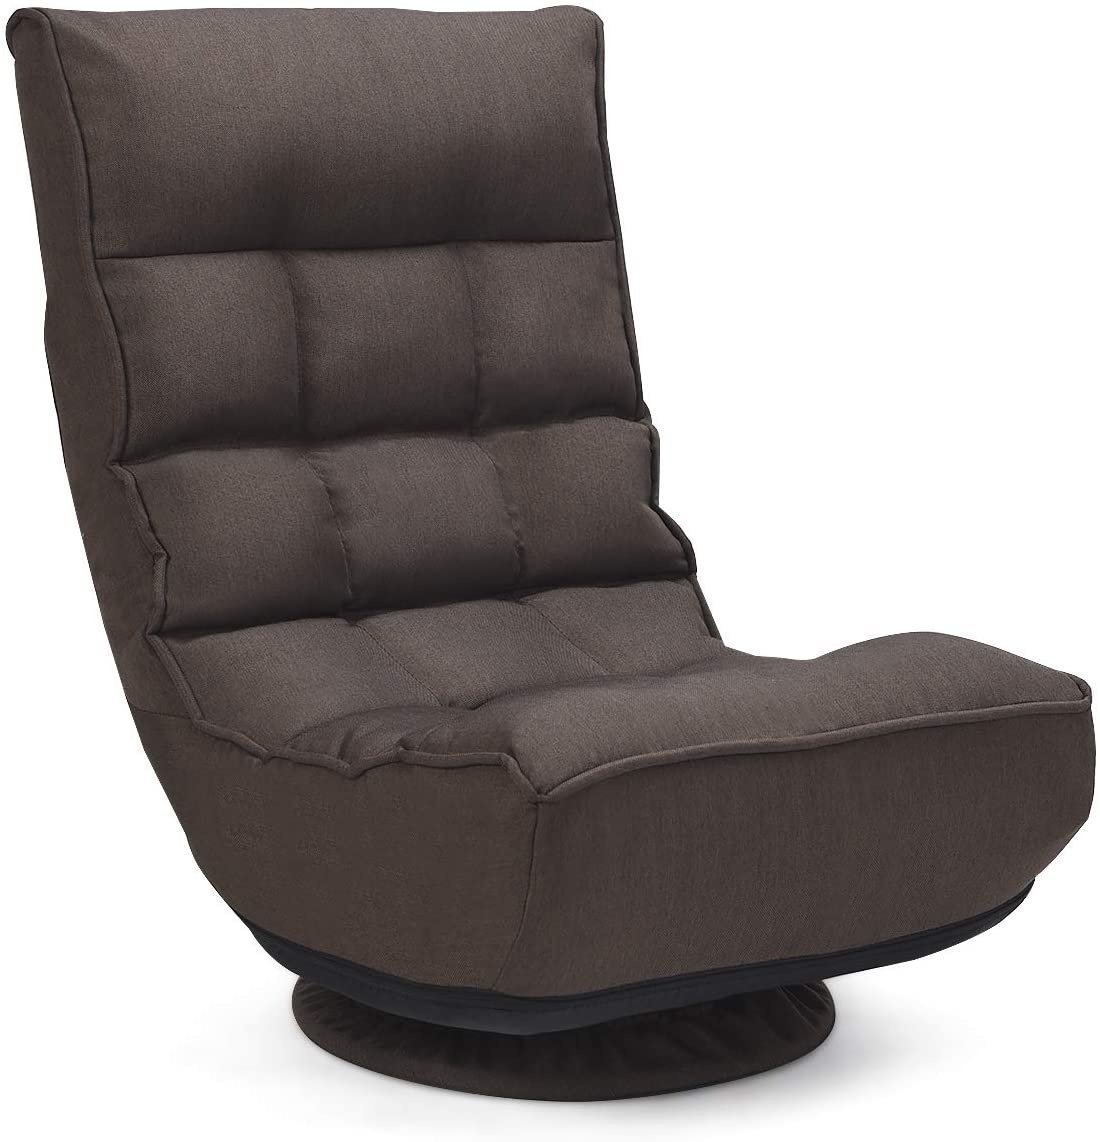 4. Giantex 360-Degree Swivel Gaming Chair